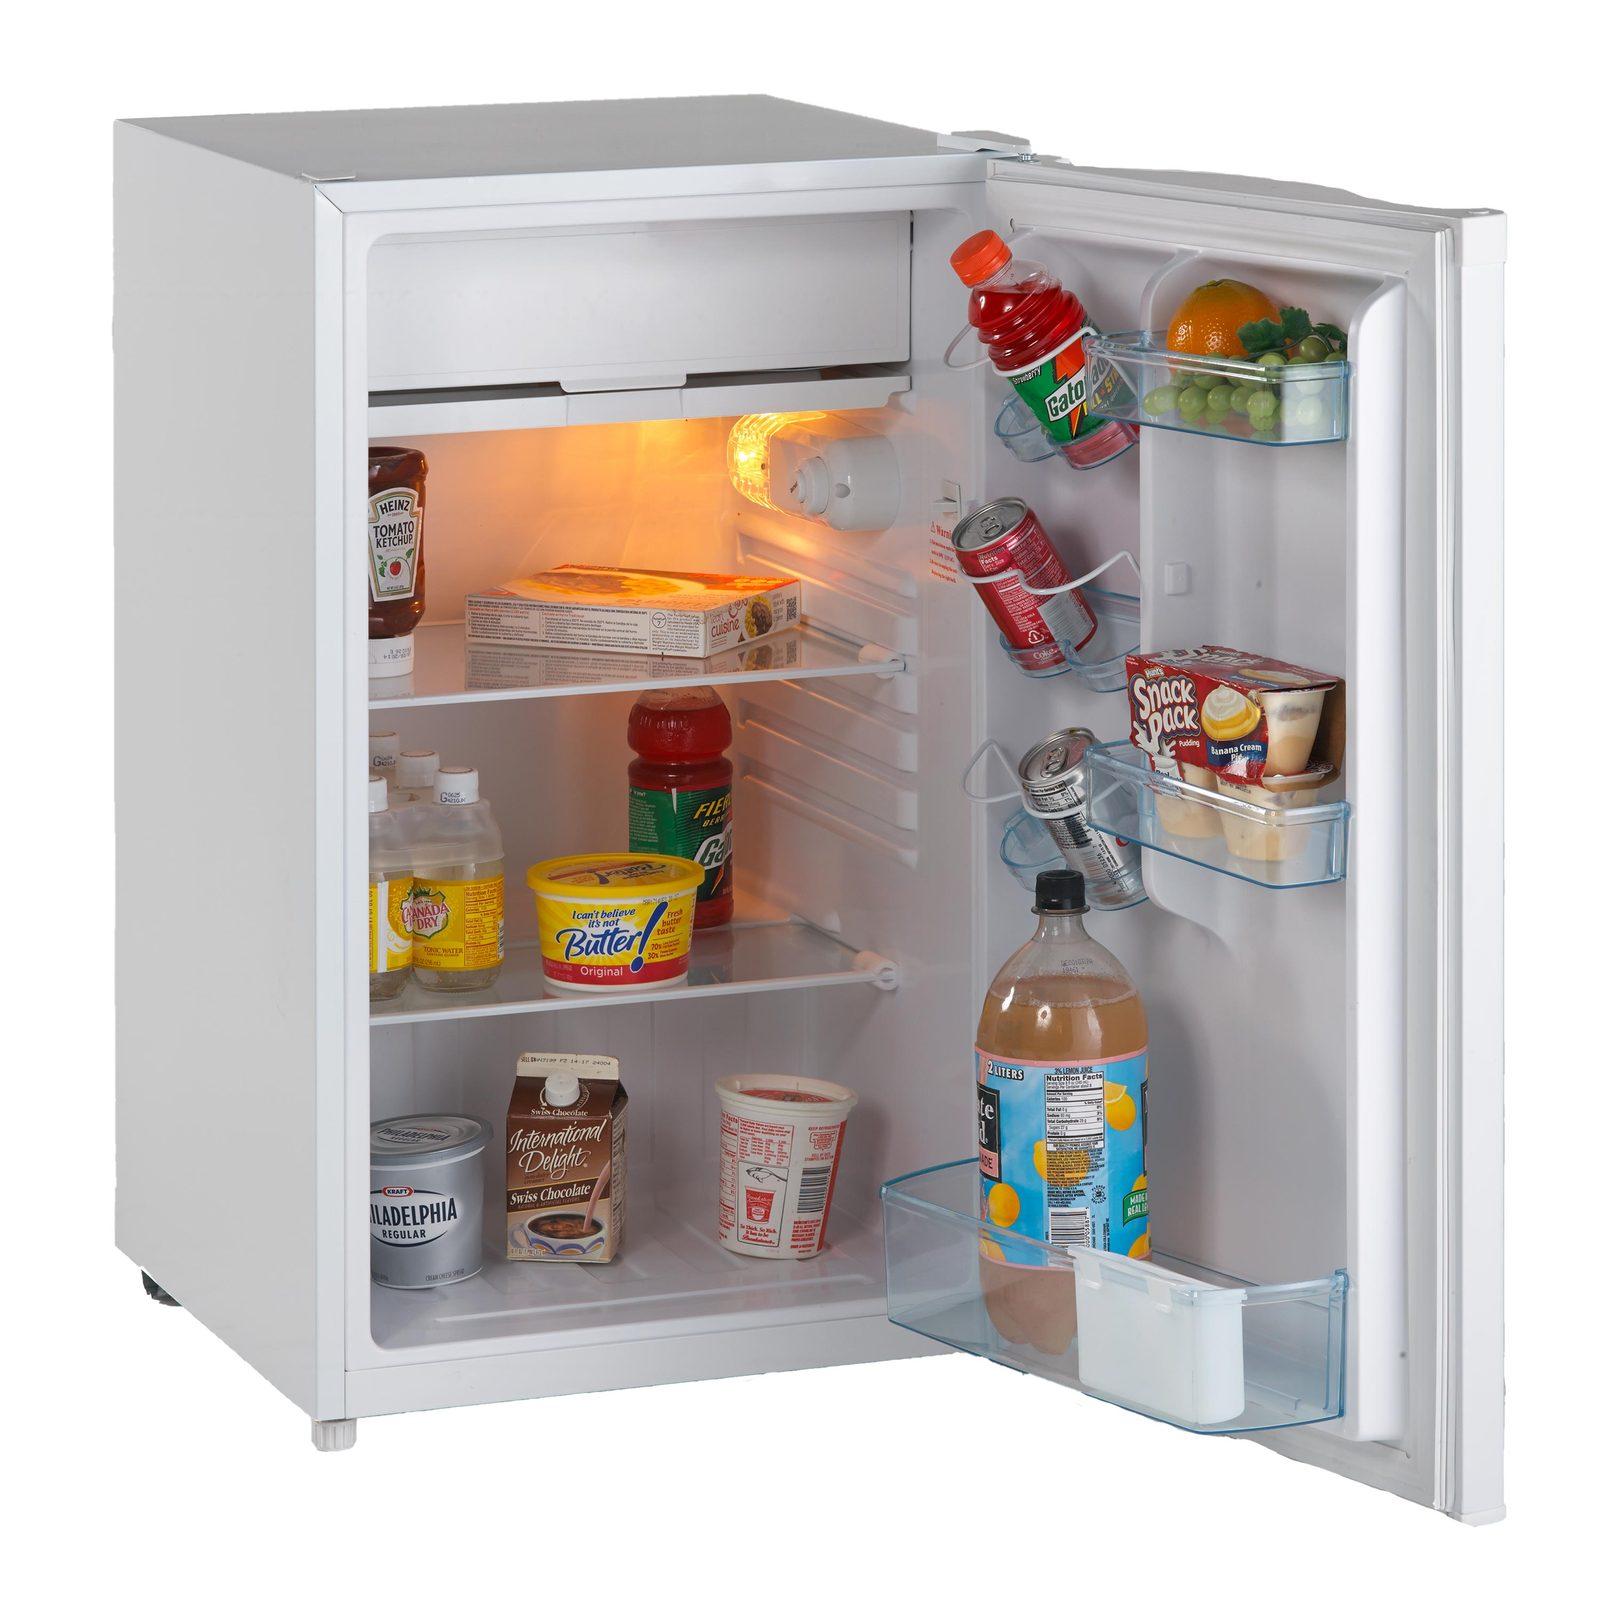 AVANTI RM4436SS 4.4 cu. ft. Compact Refrigerator